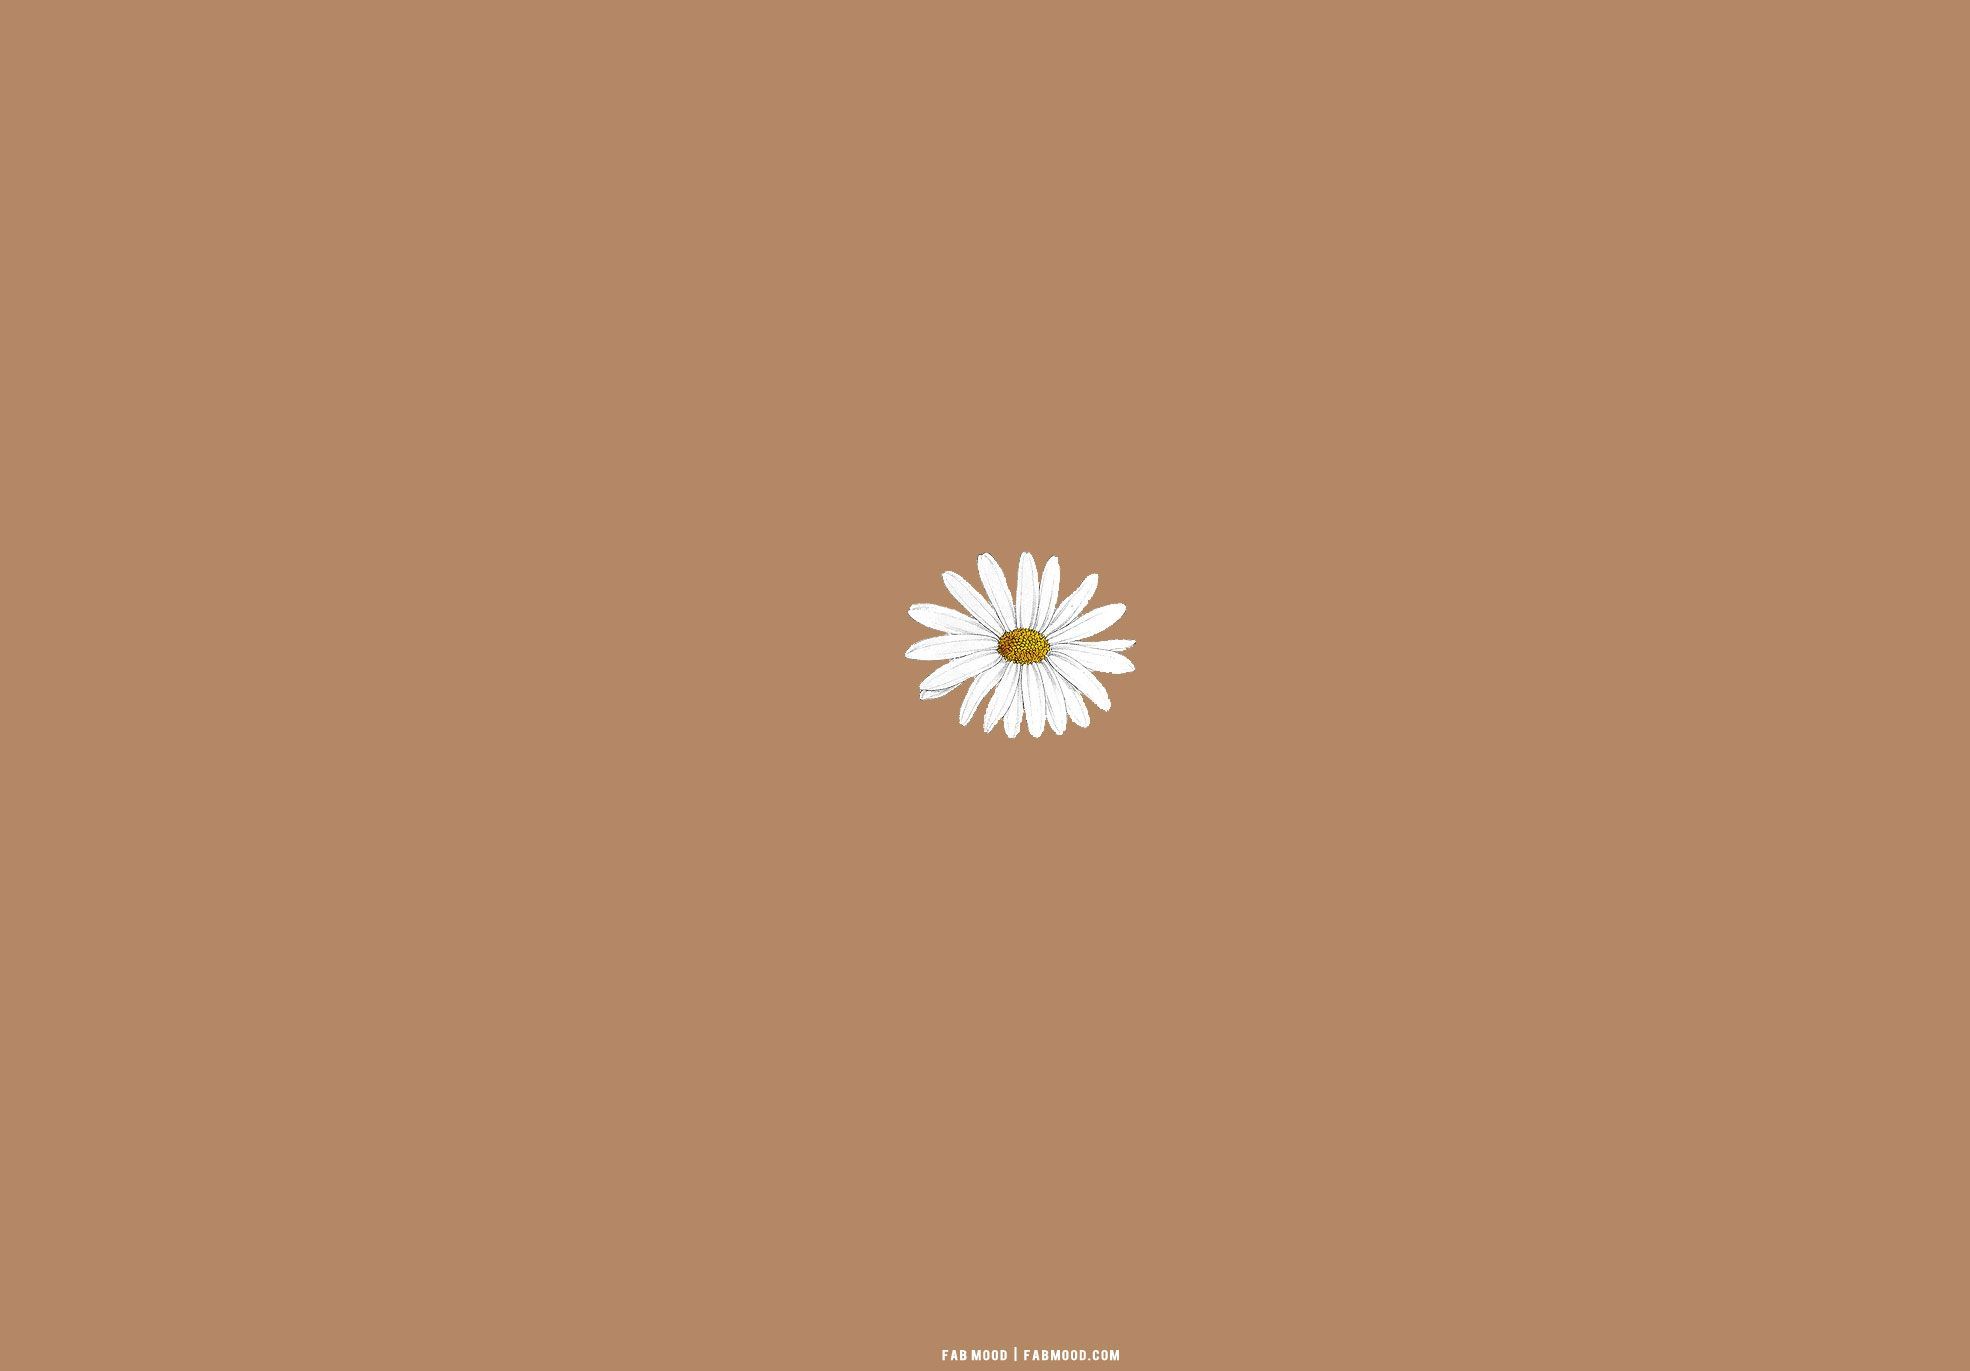  Einfach Hintergrundbild 1970x1371. Brown Aesthetic Wallpaper for Laptop : Daisy